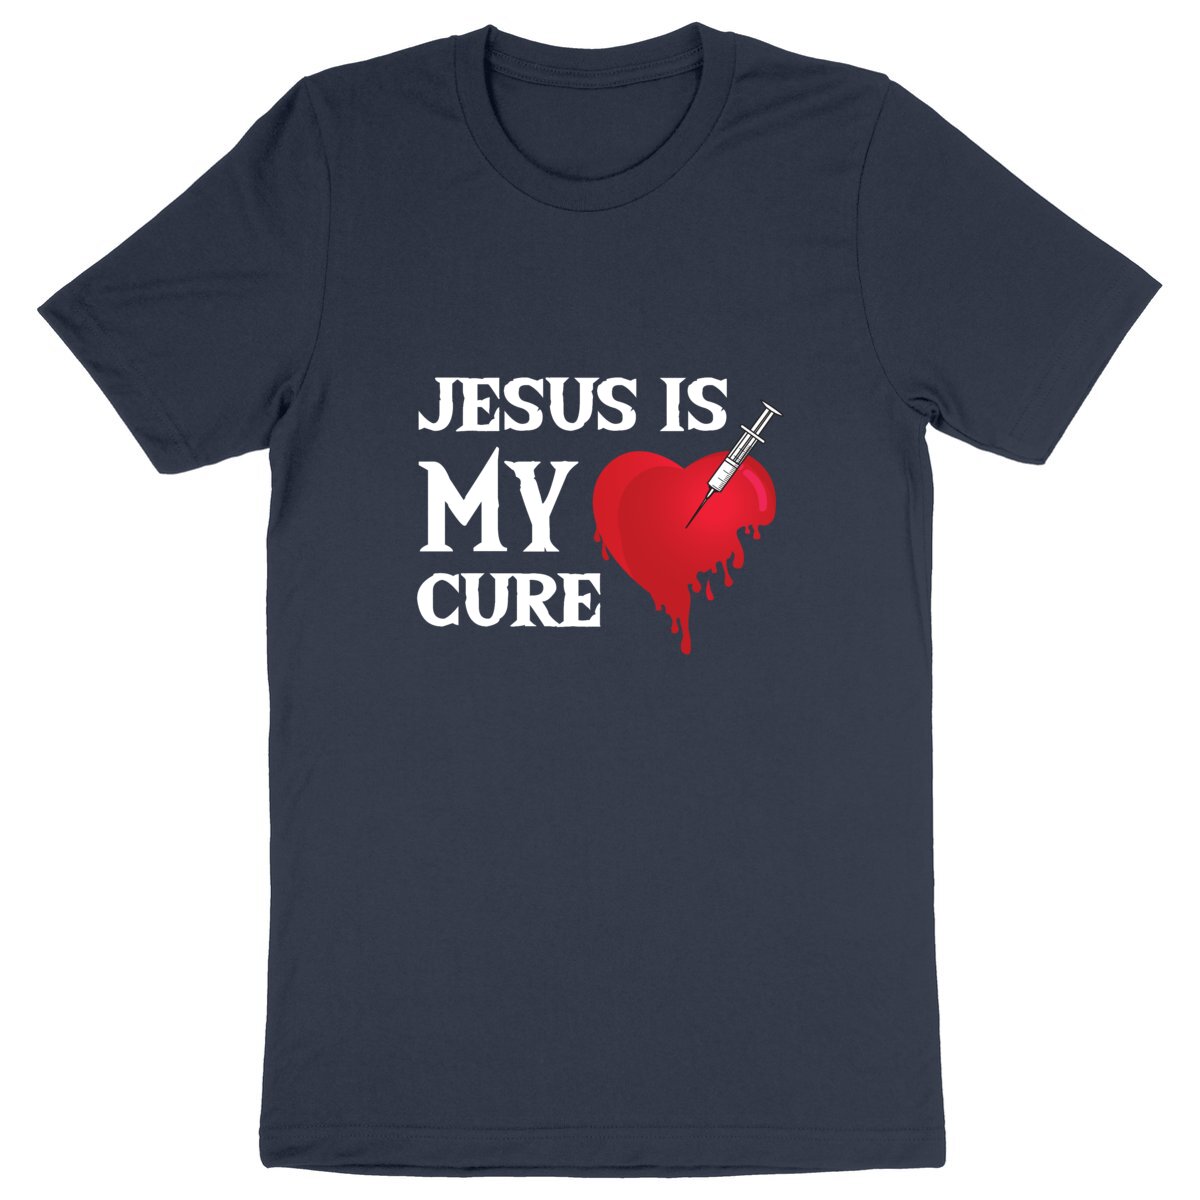 JESUS IS MY CURE ORGANIC T-SHIRT